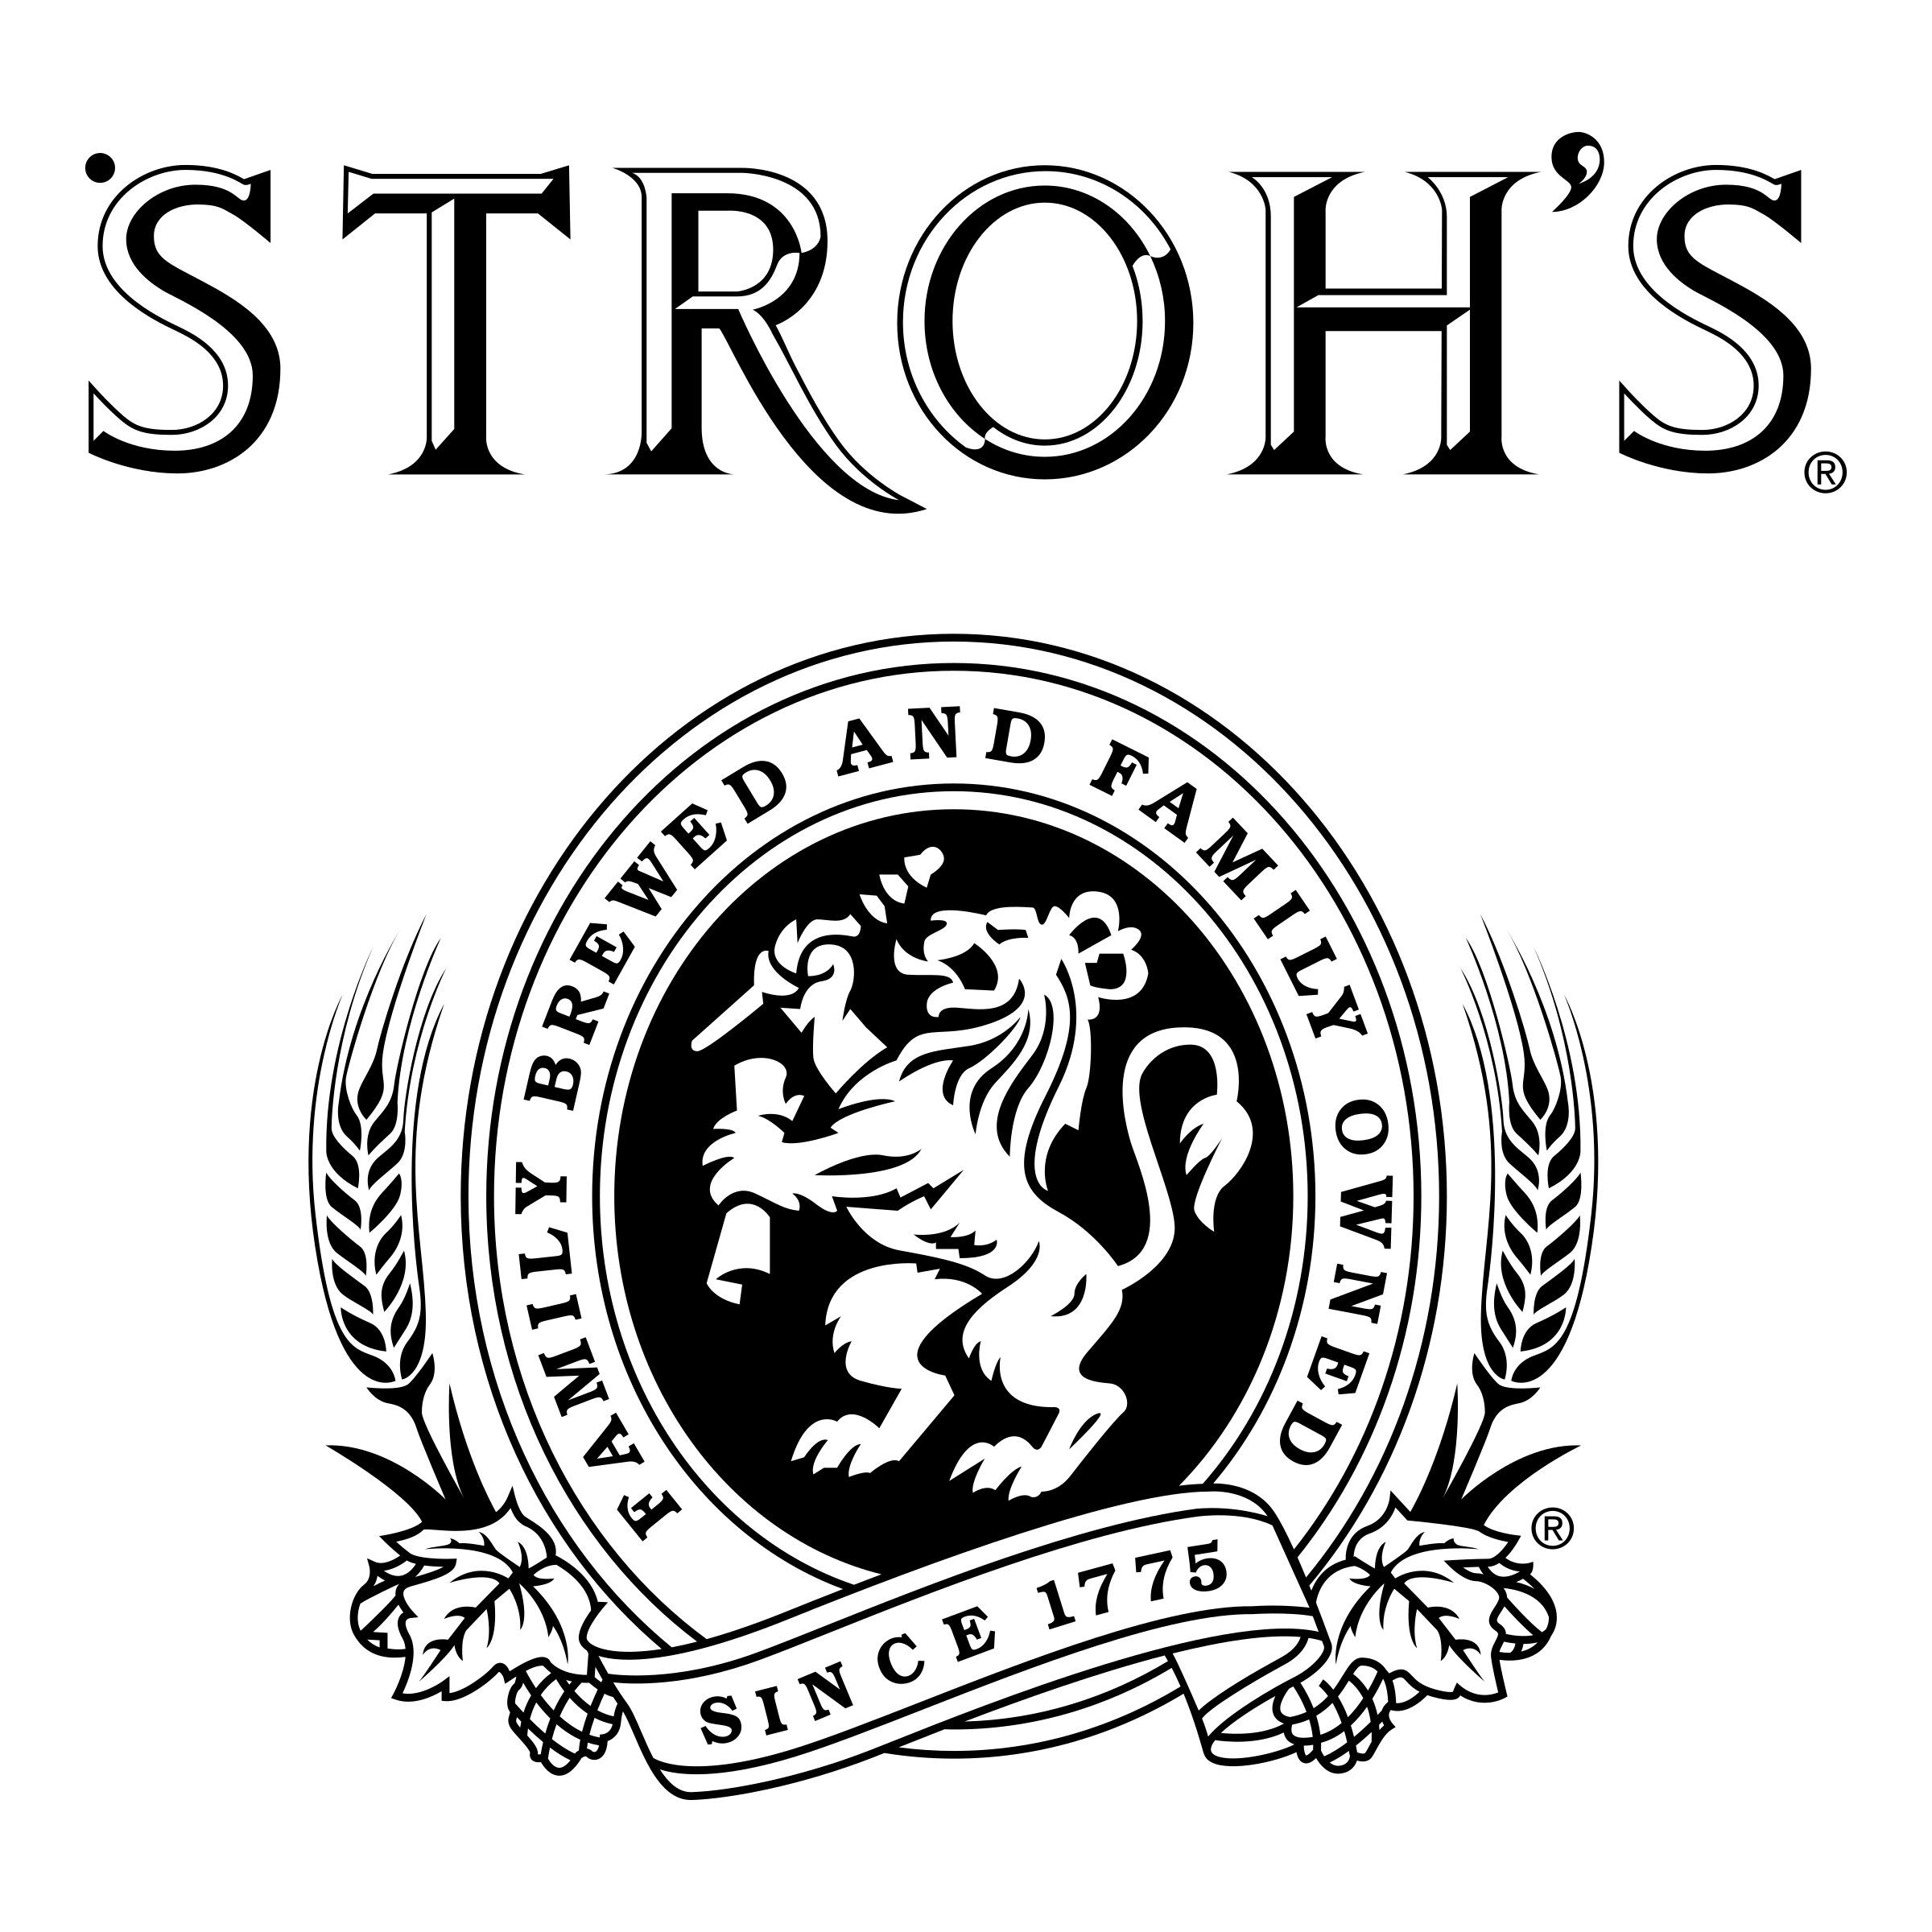 Strohs Logo - Stroh's Logo PNG Transparent & SVG Vector - Freebie Supply